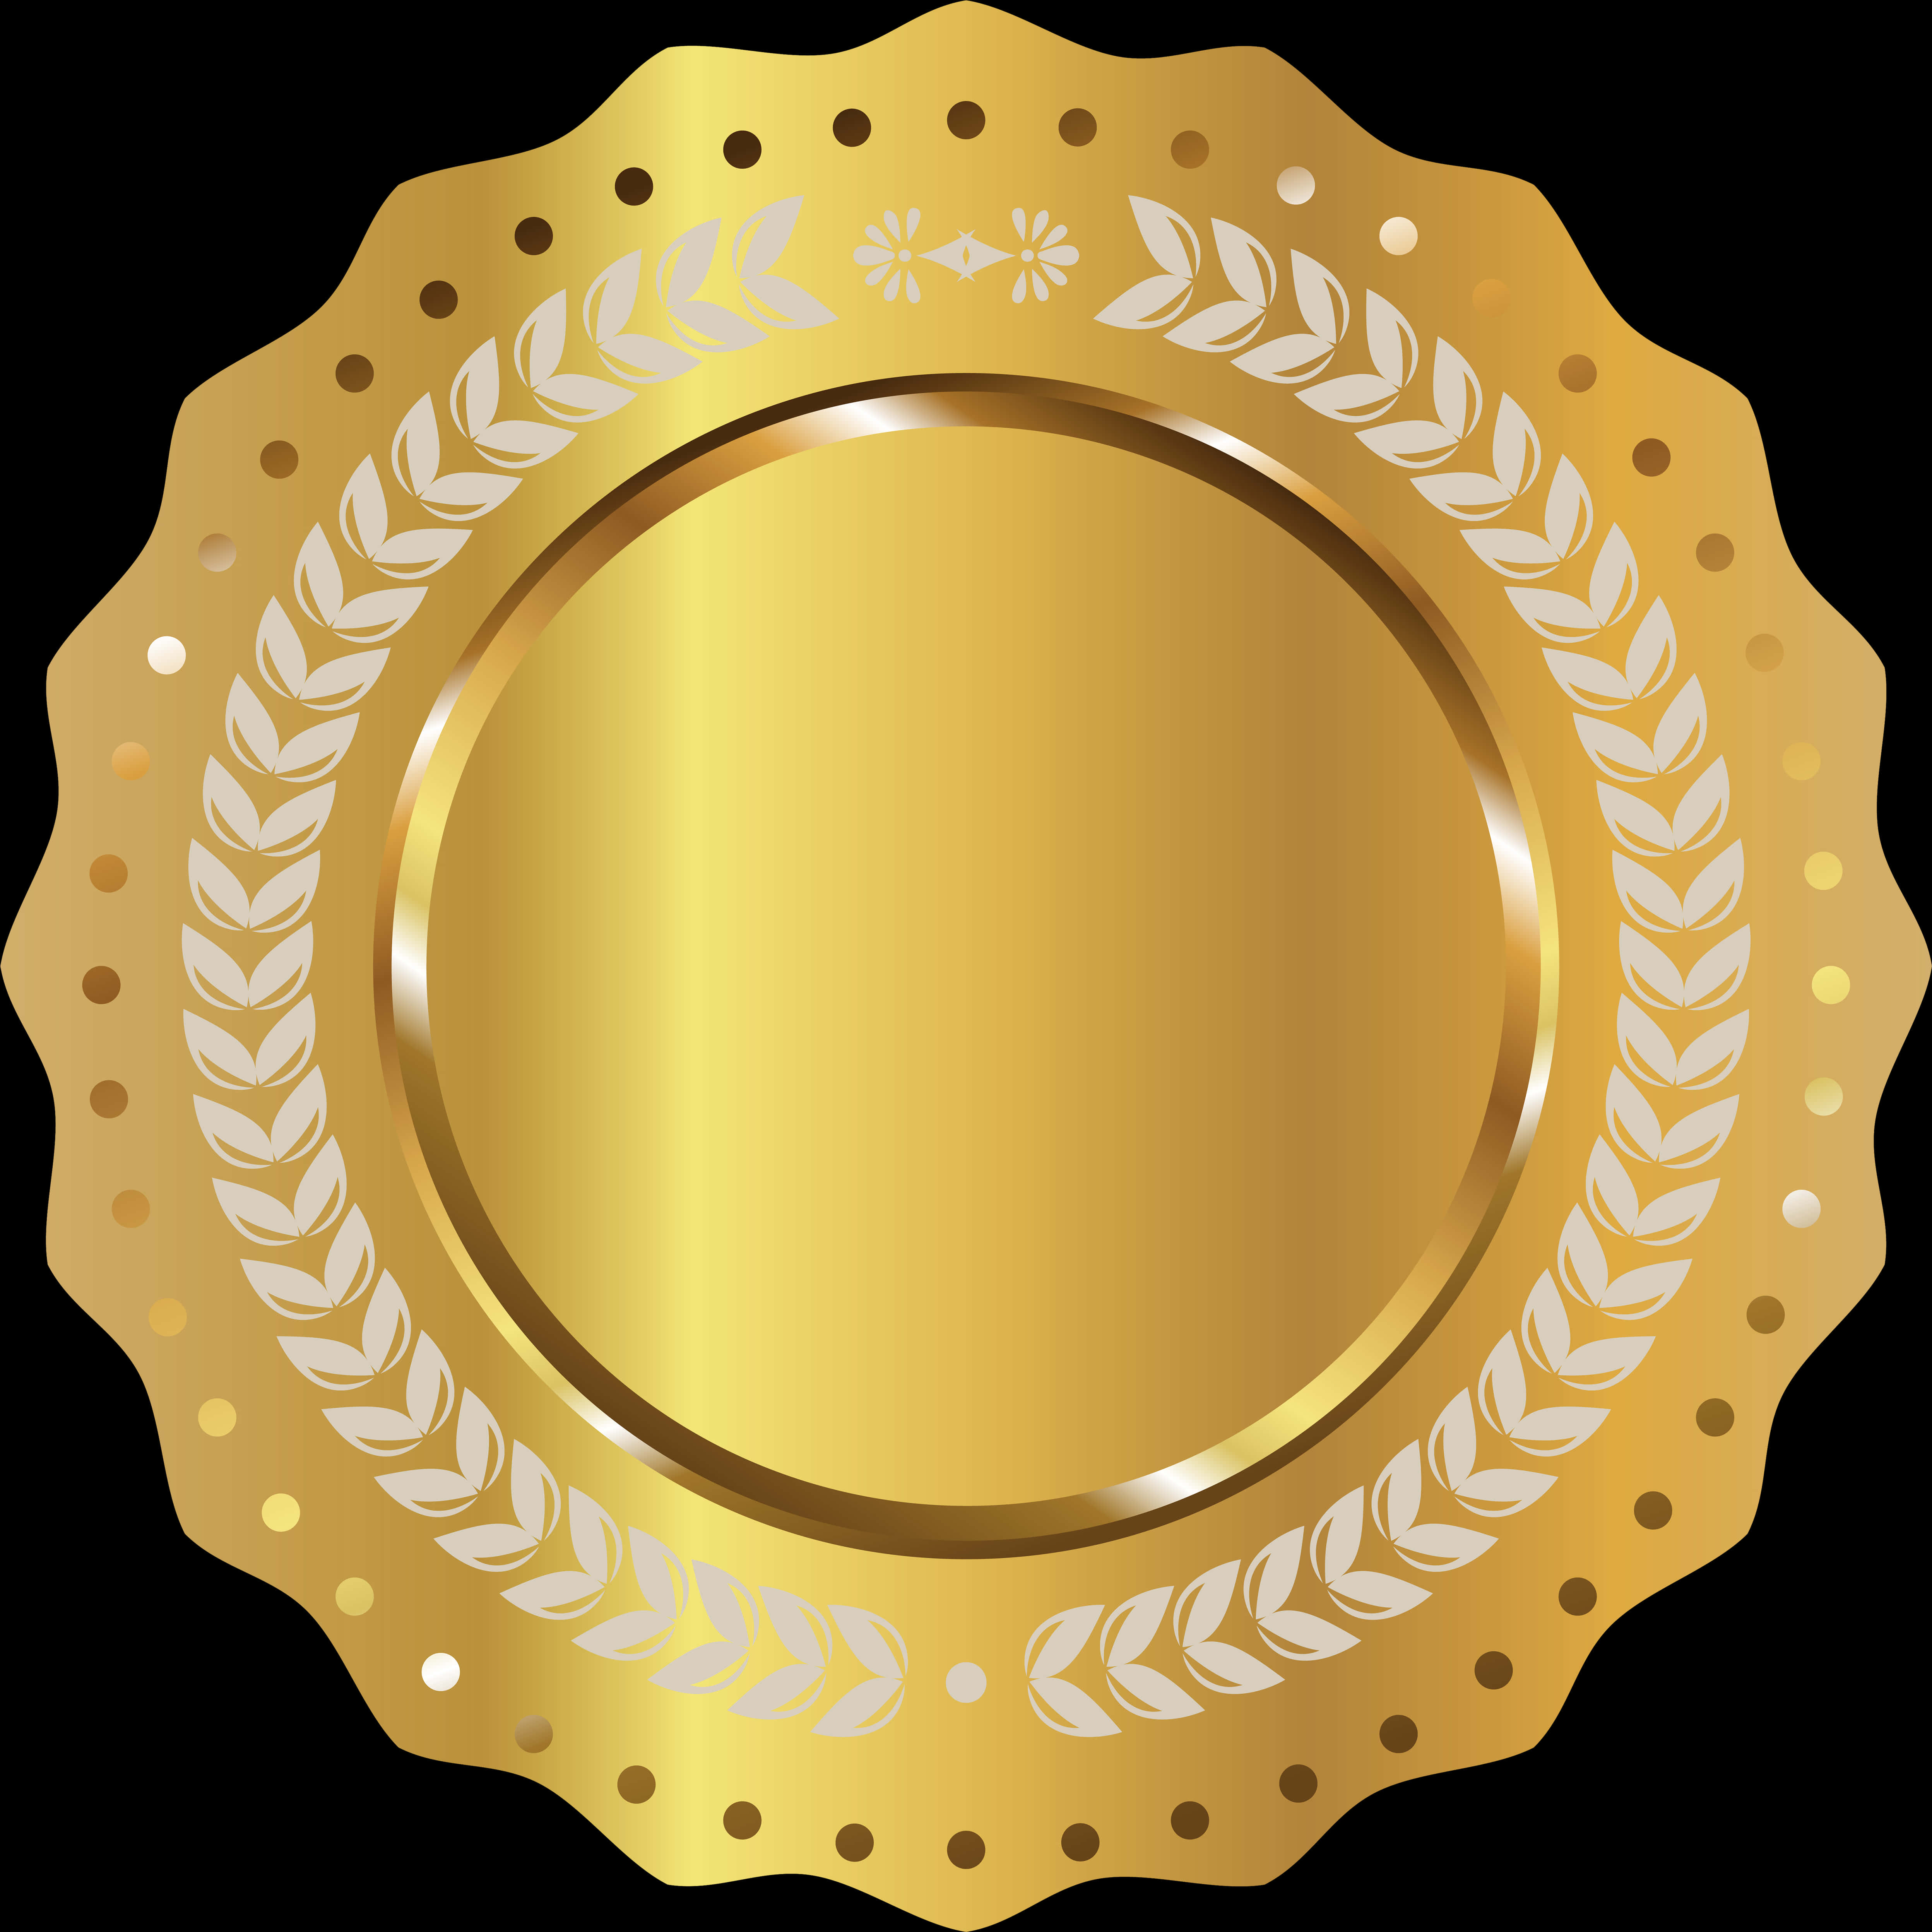 Golden Award Plaque Design PNG